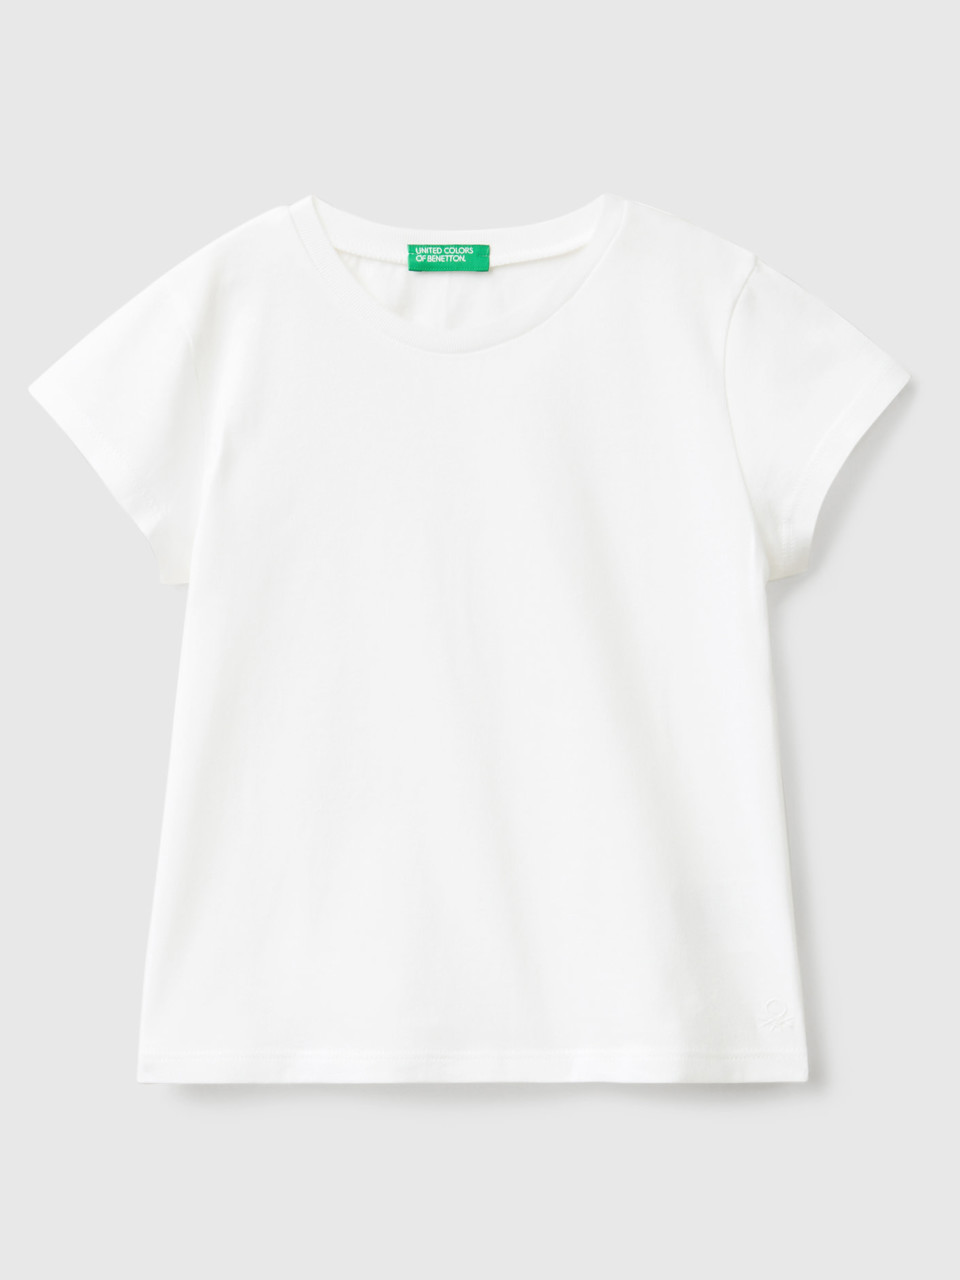 Benetton, 100% Organic Cotton T-shirt, White, Kids